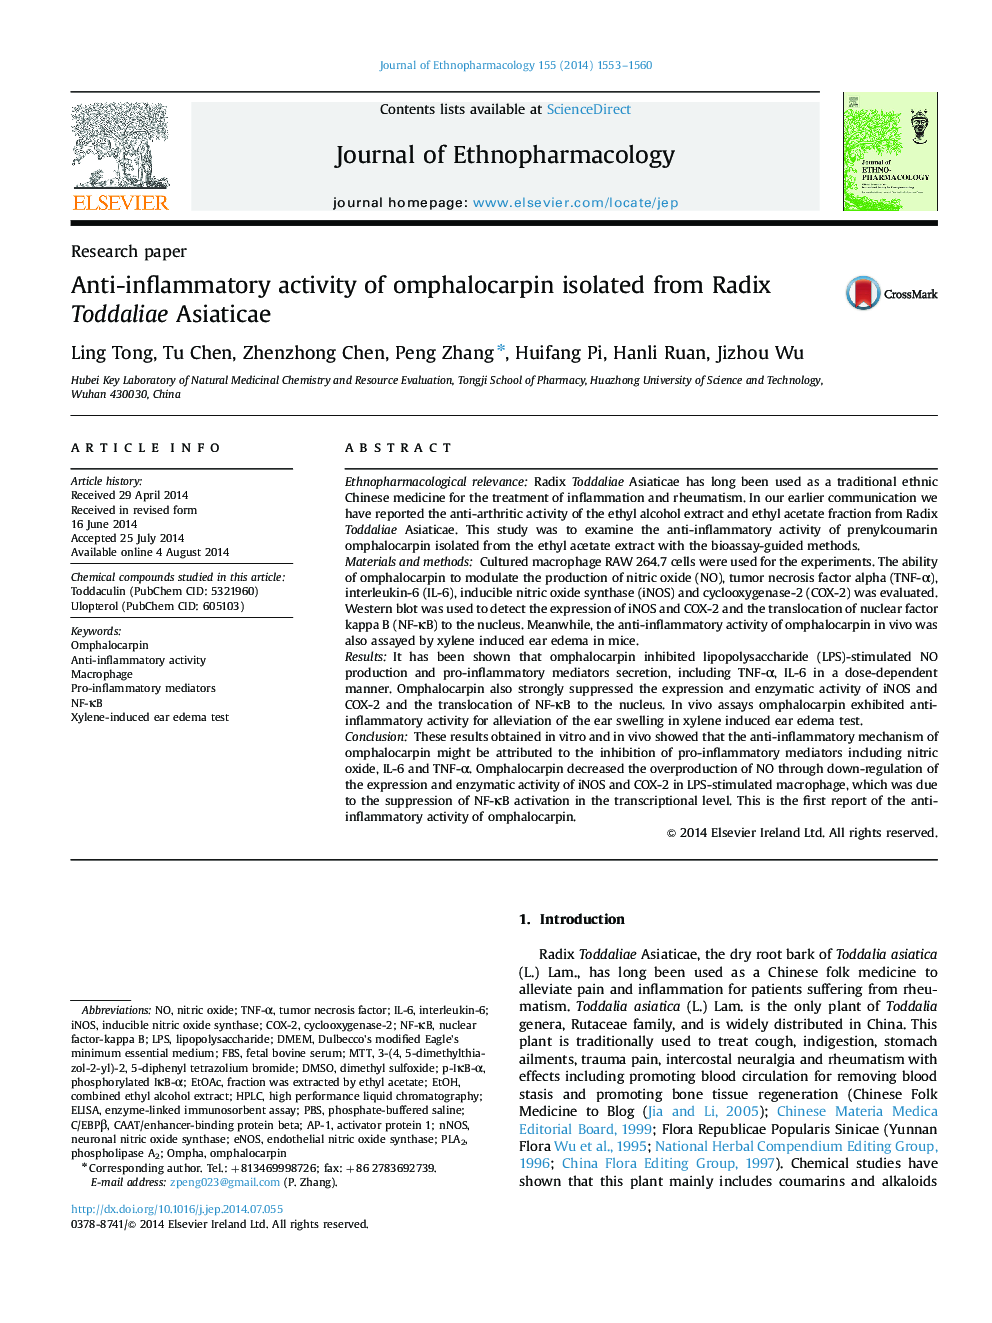 Anti-inflammatory activity of omphalocarpin isolated from Radix Toddaliae Asiaticae